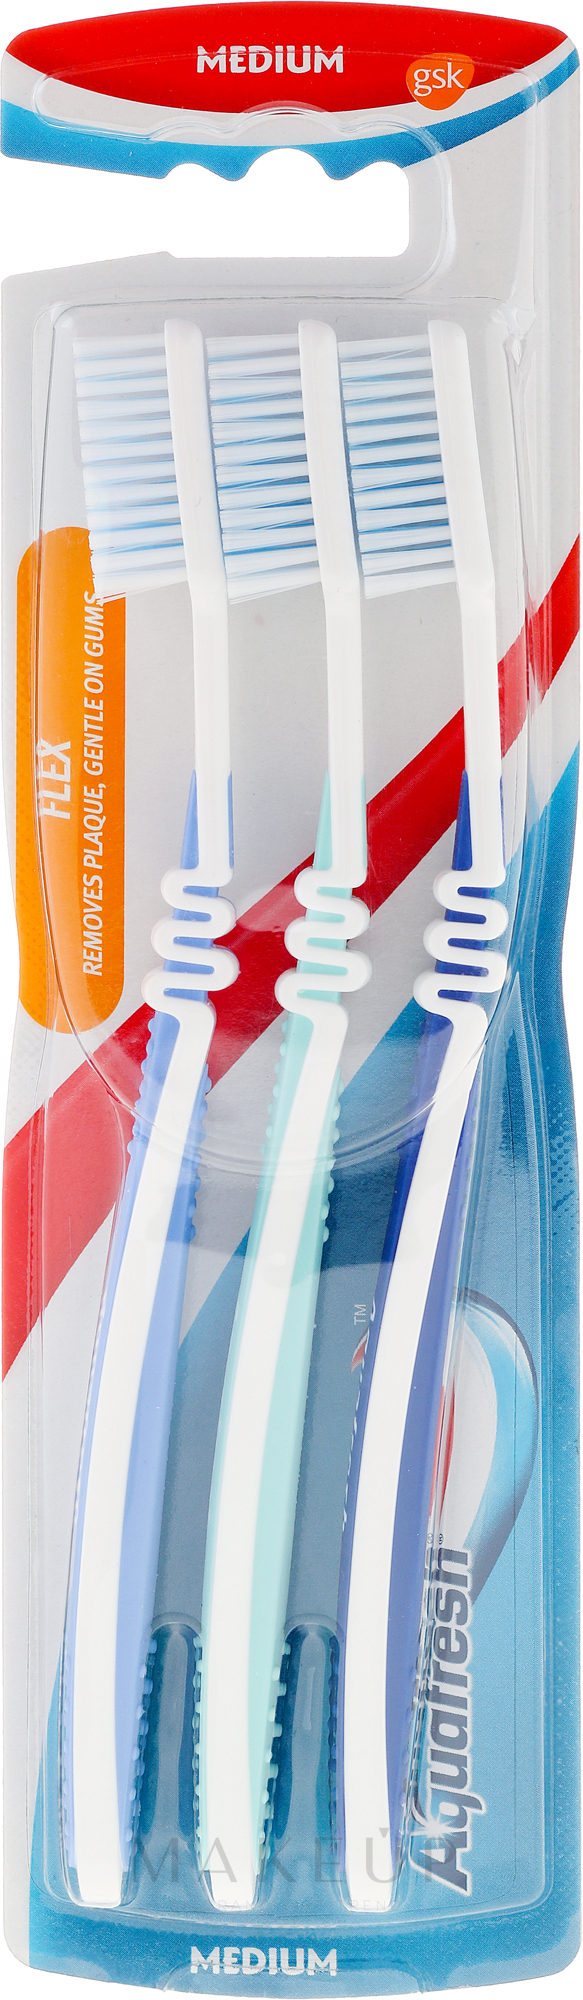 Zahnbürste mittel Flex lila, hellblau, dunkelblau 3 St. - Aquafresh Flex Medium Toothbrush — Bild 3 St.